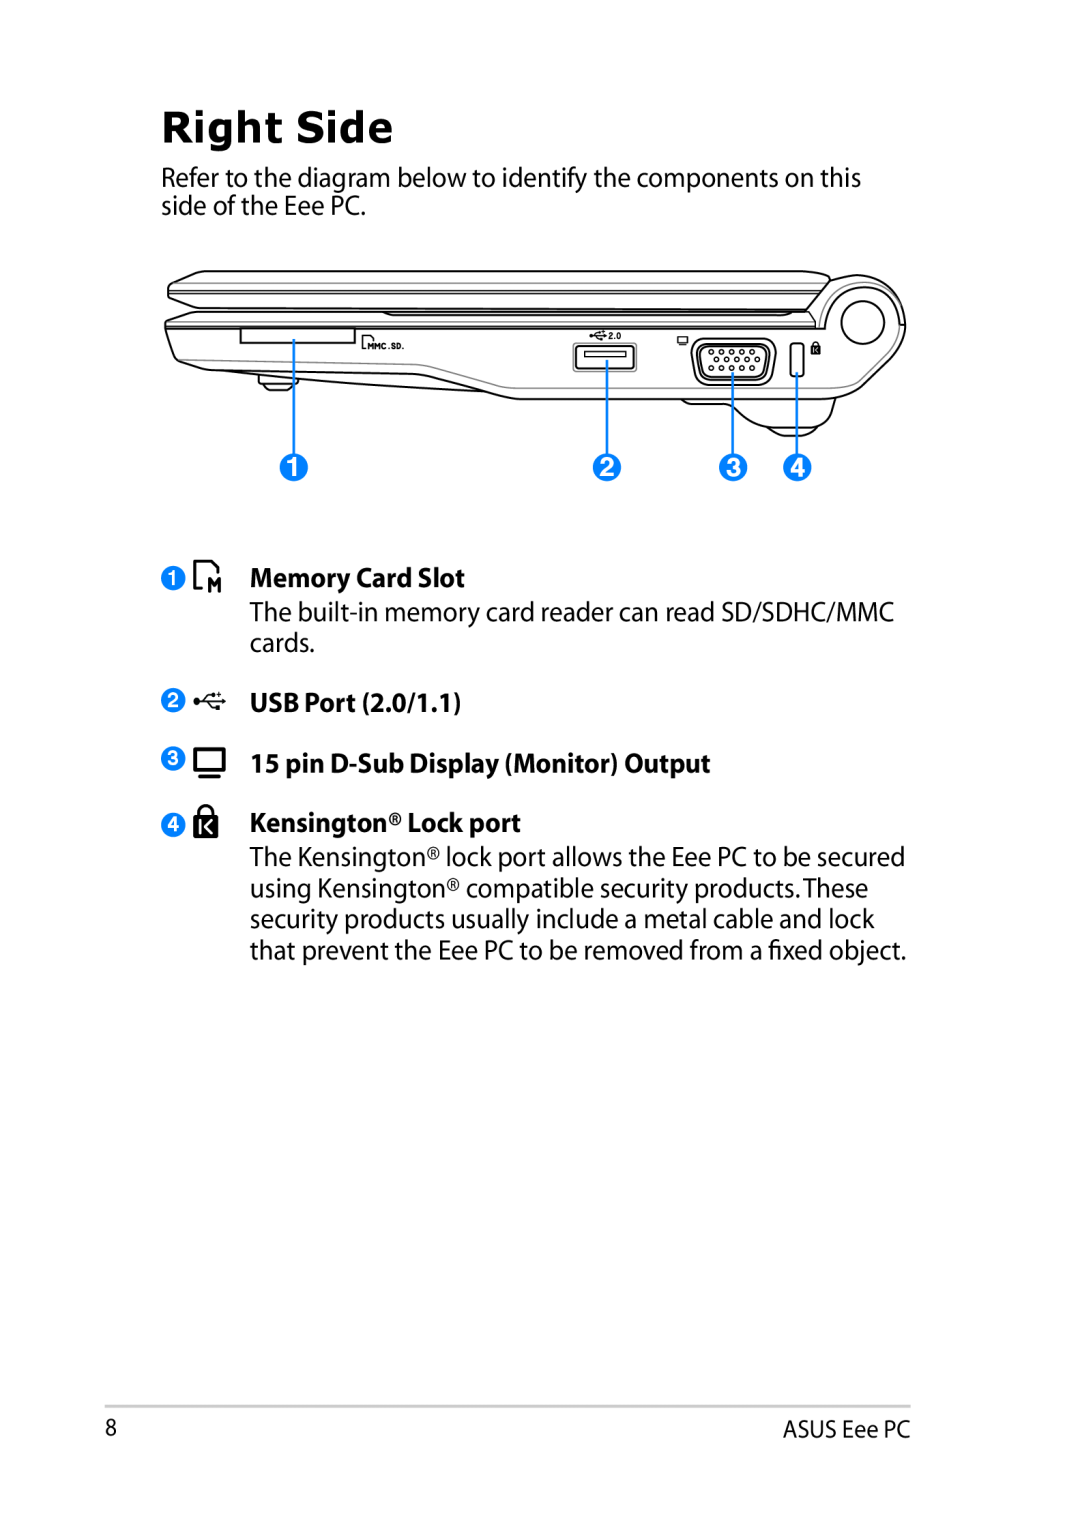 Asus 900AX user manual Right Side, Memory Card Slot, USB Port 2.0/1.1, Kensington Lock port 